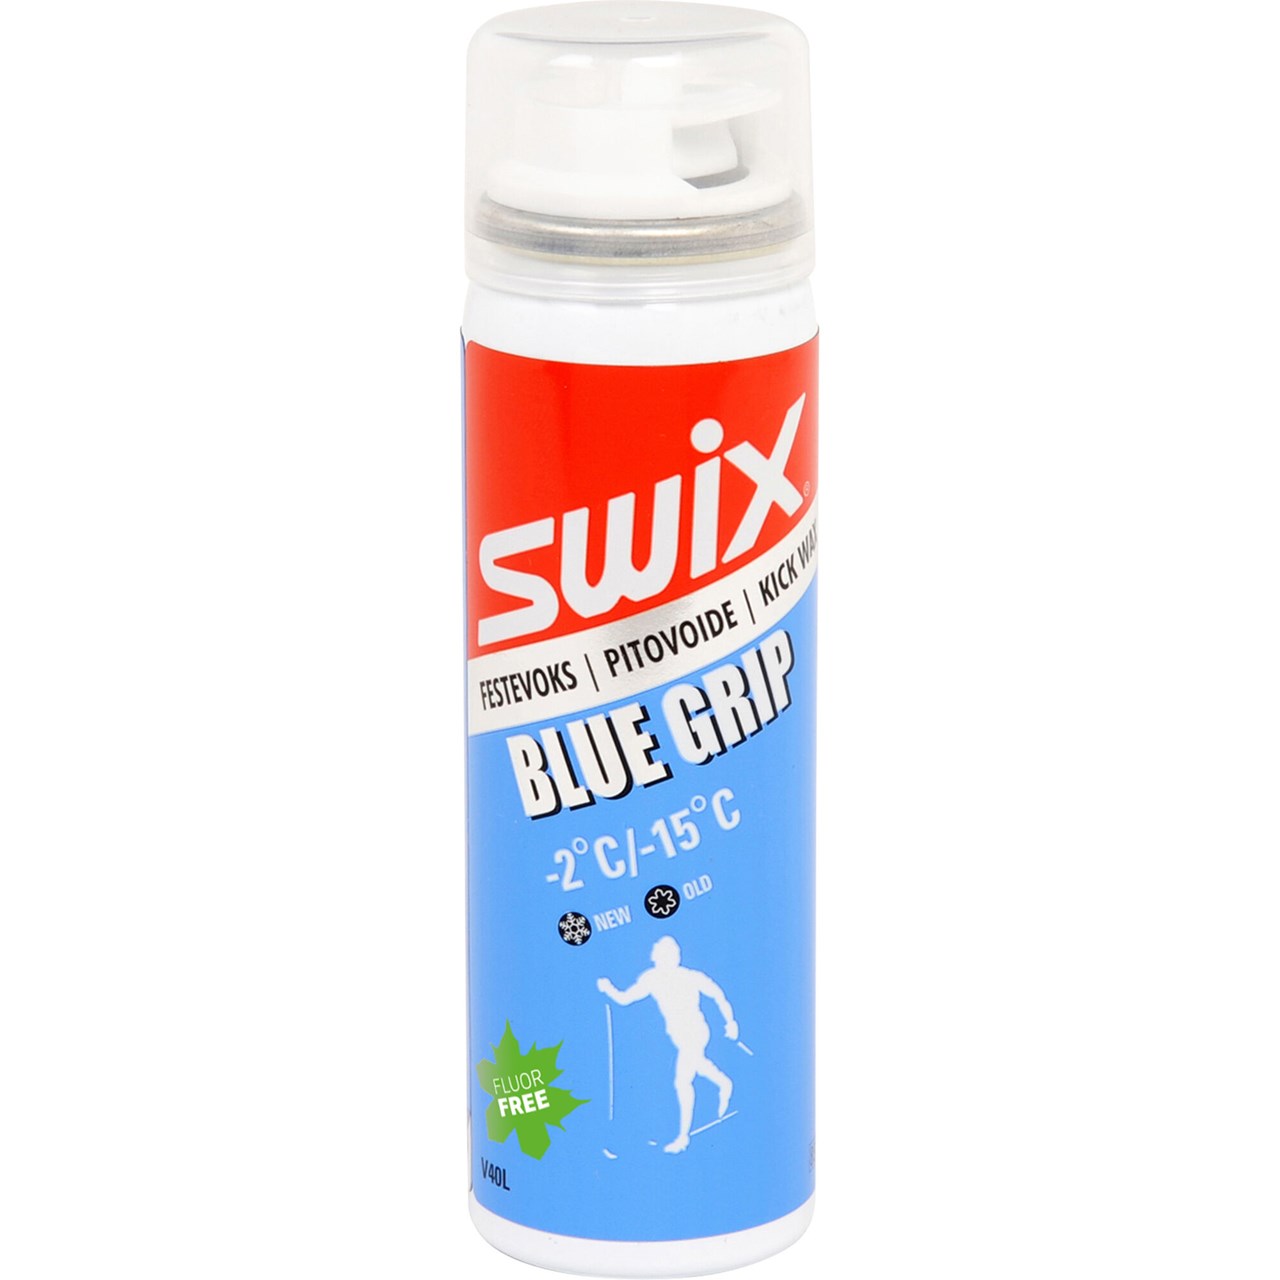 Swix (Easy) Blue Grip 70ml